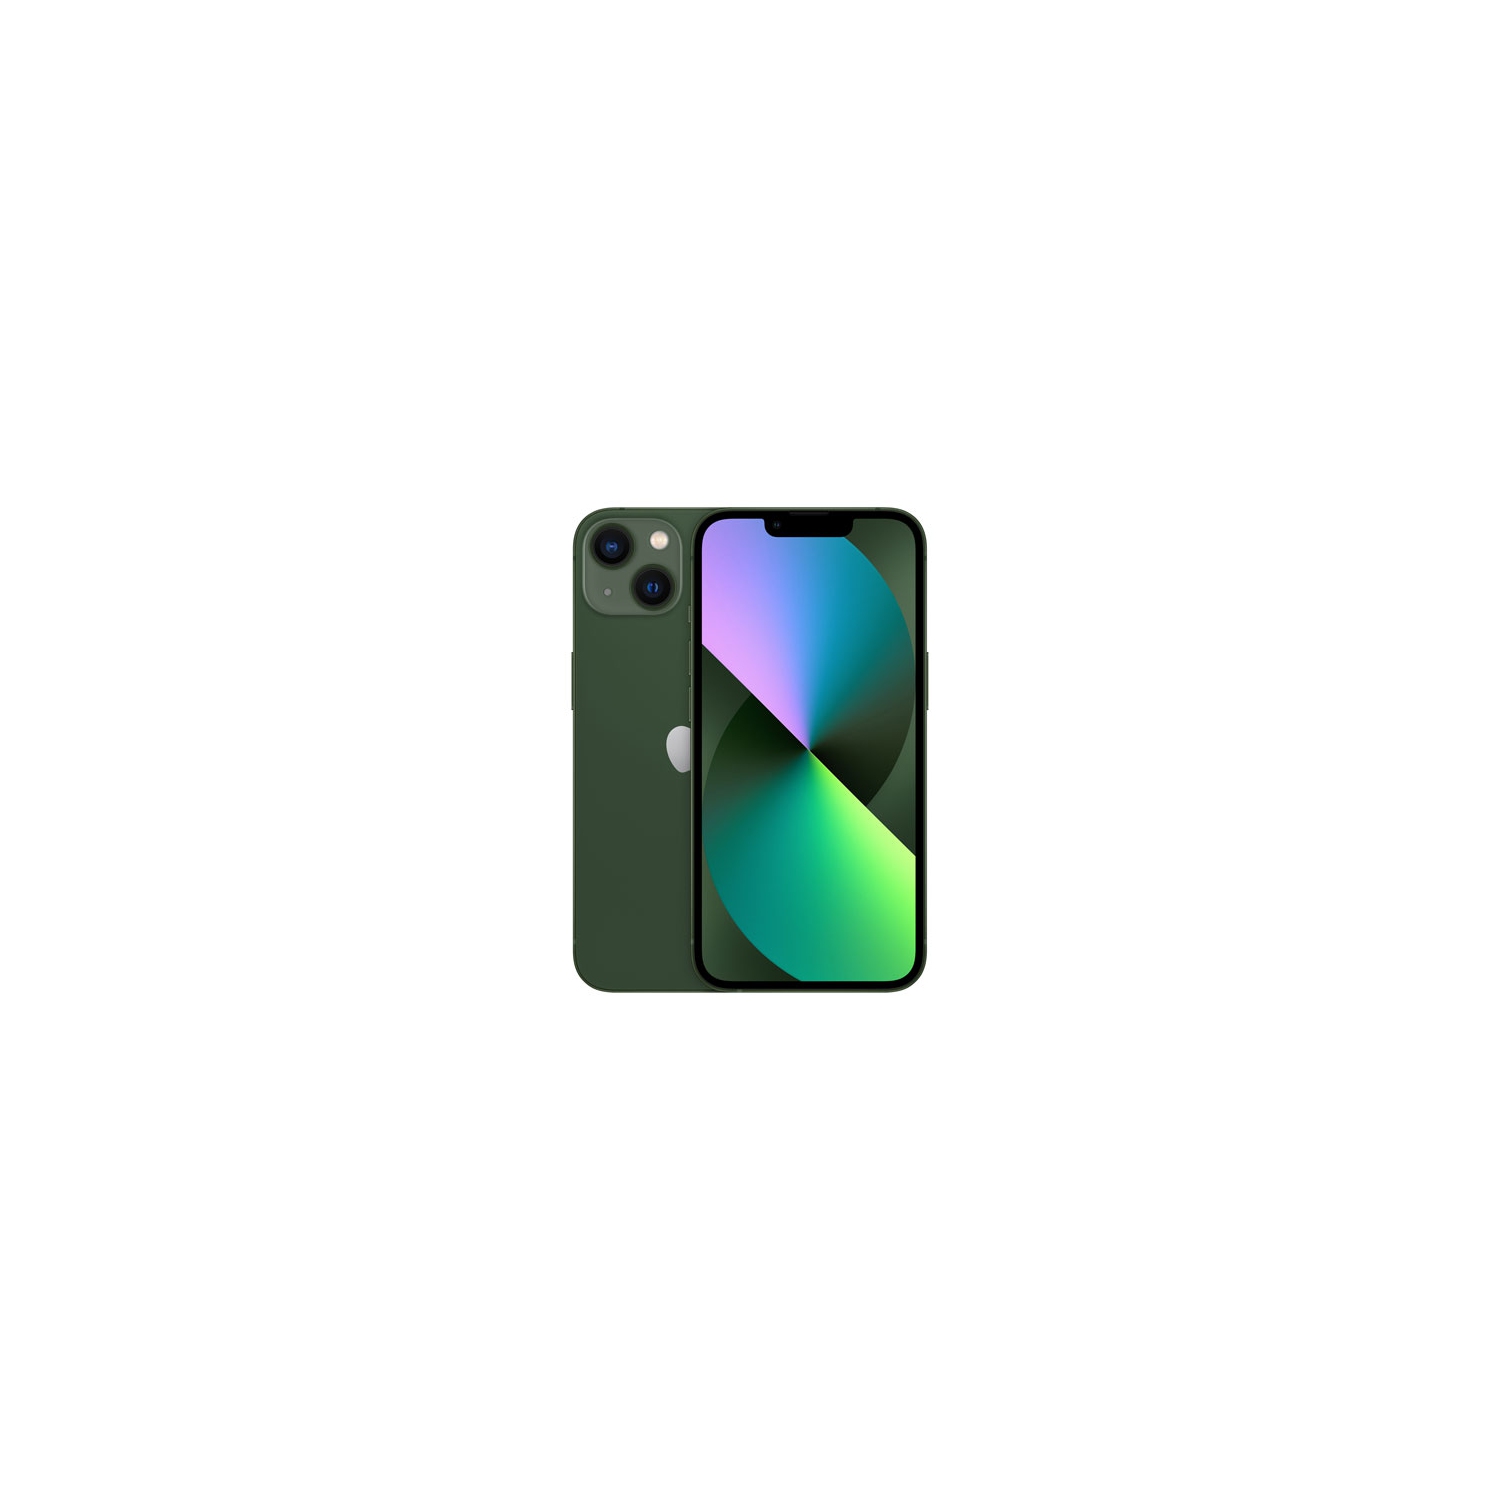 Apple iPhone 13 mini 128GB - Green - Unlocked - Open Box